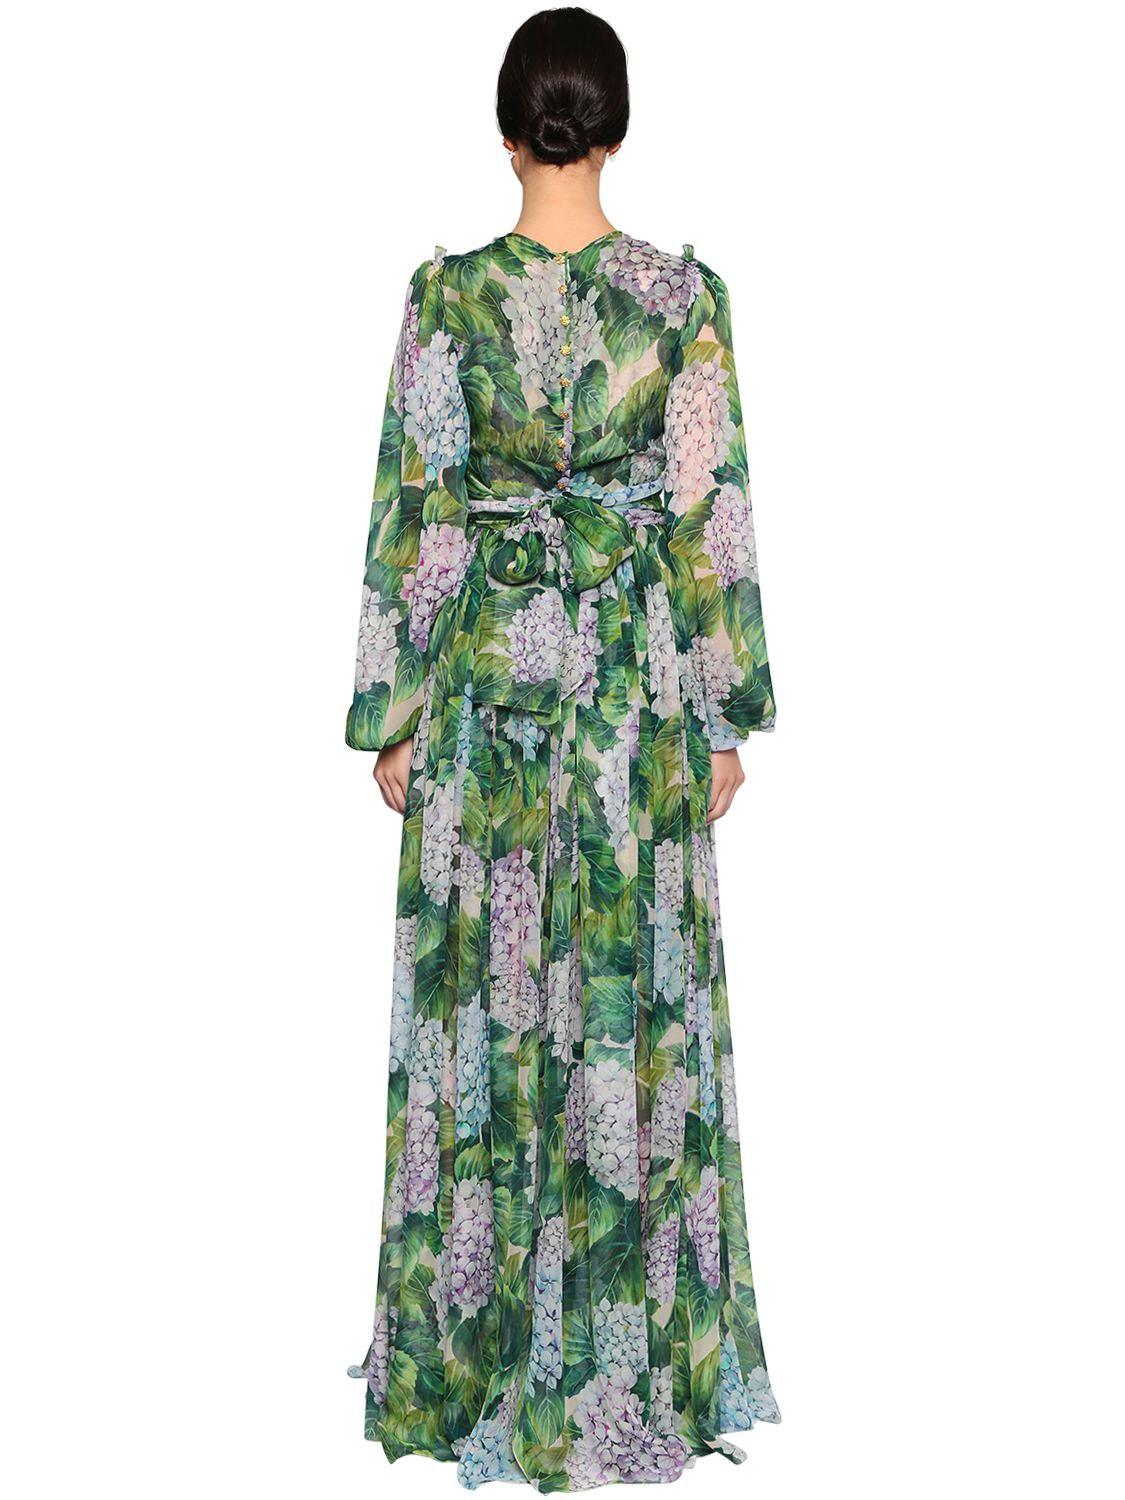 Dolce & Gabbana Hydrangea Printed Silk Chiffon Dress in Green | Lyst UK